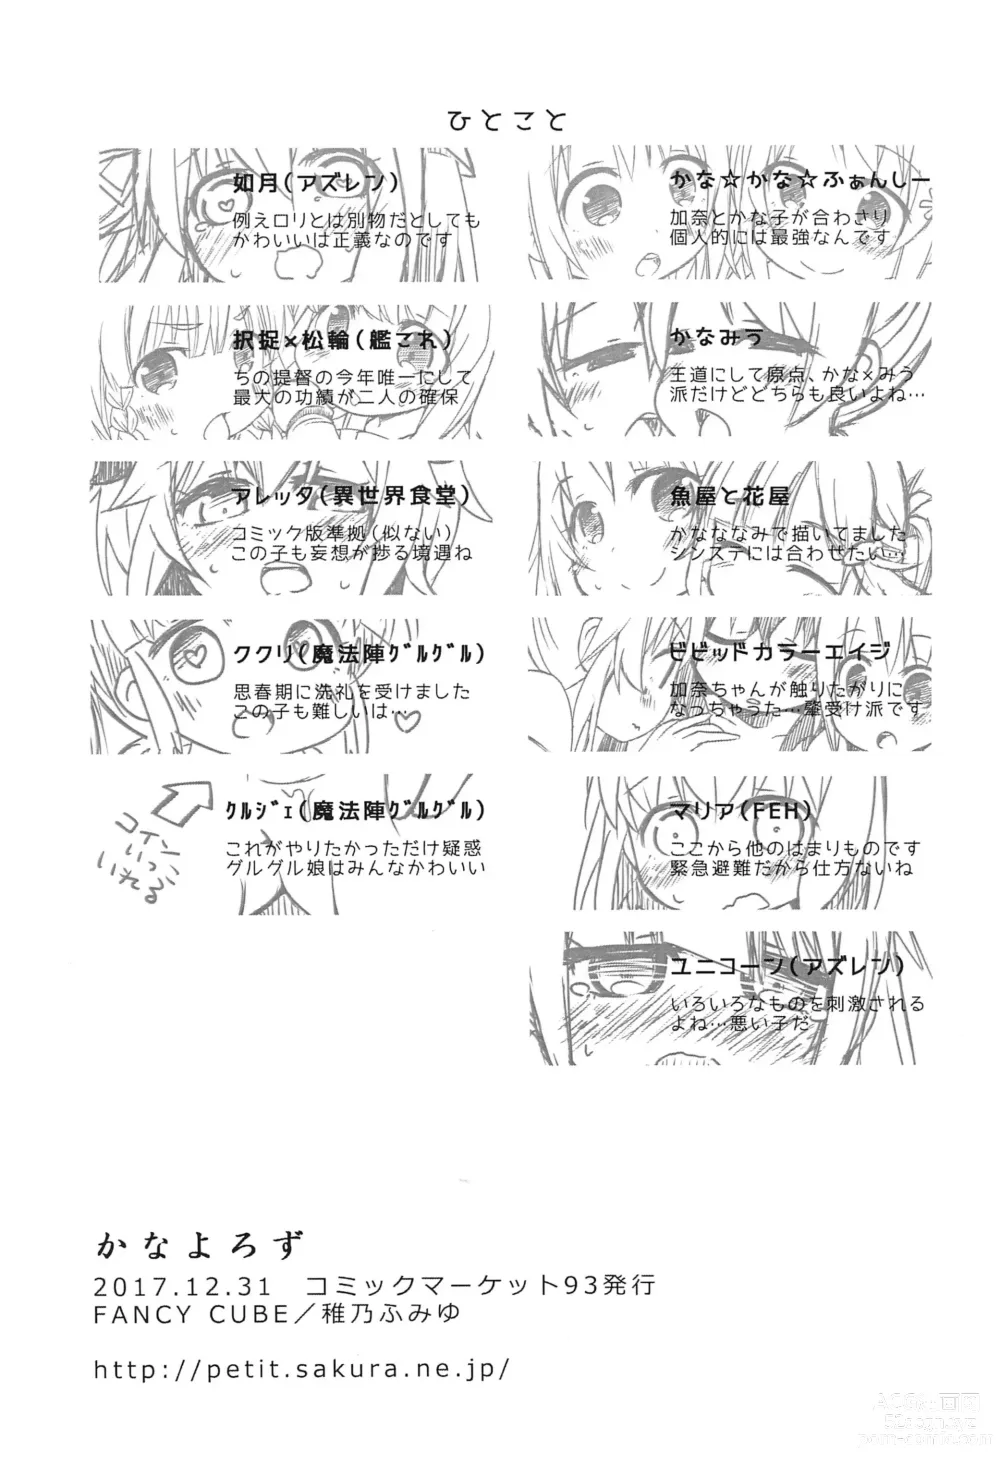 Page 13 of doujinshi Kanayorozu